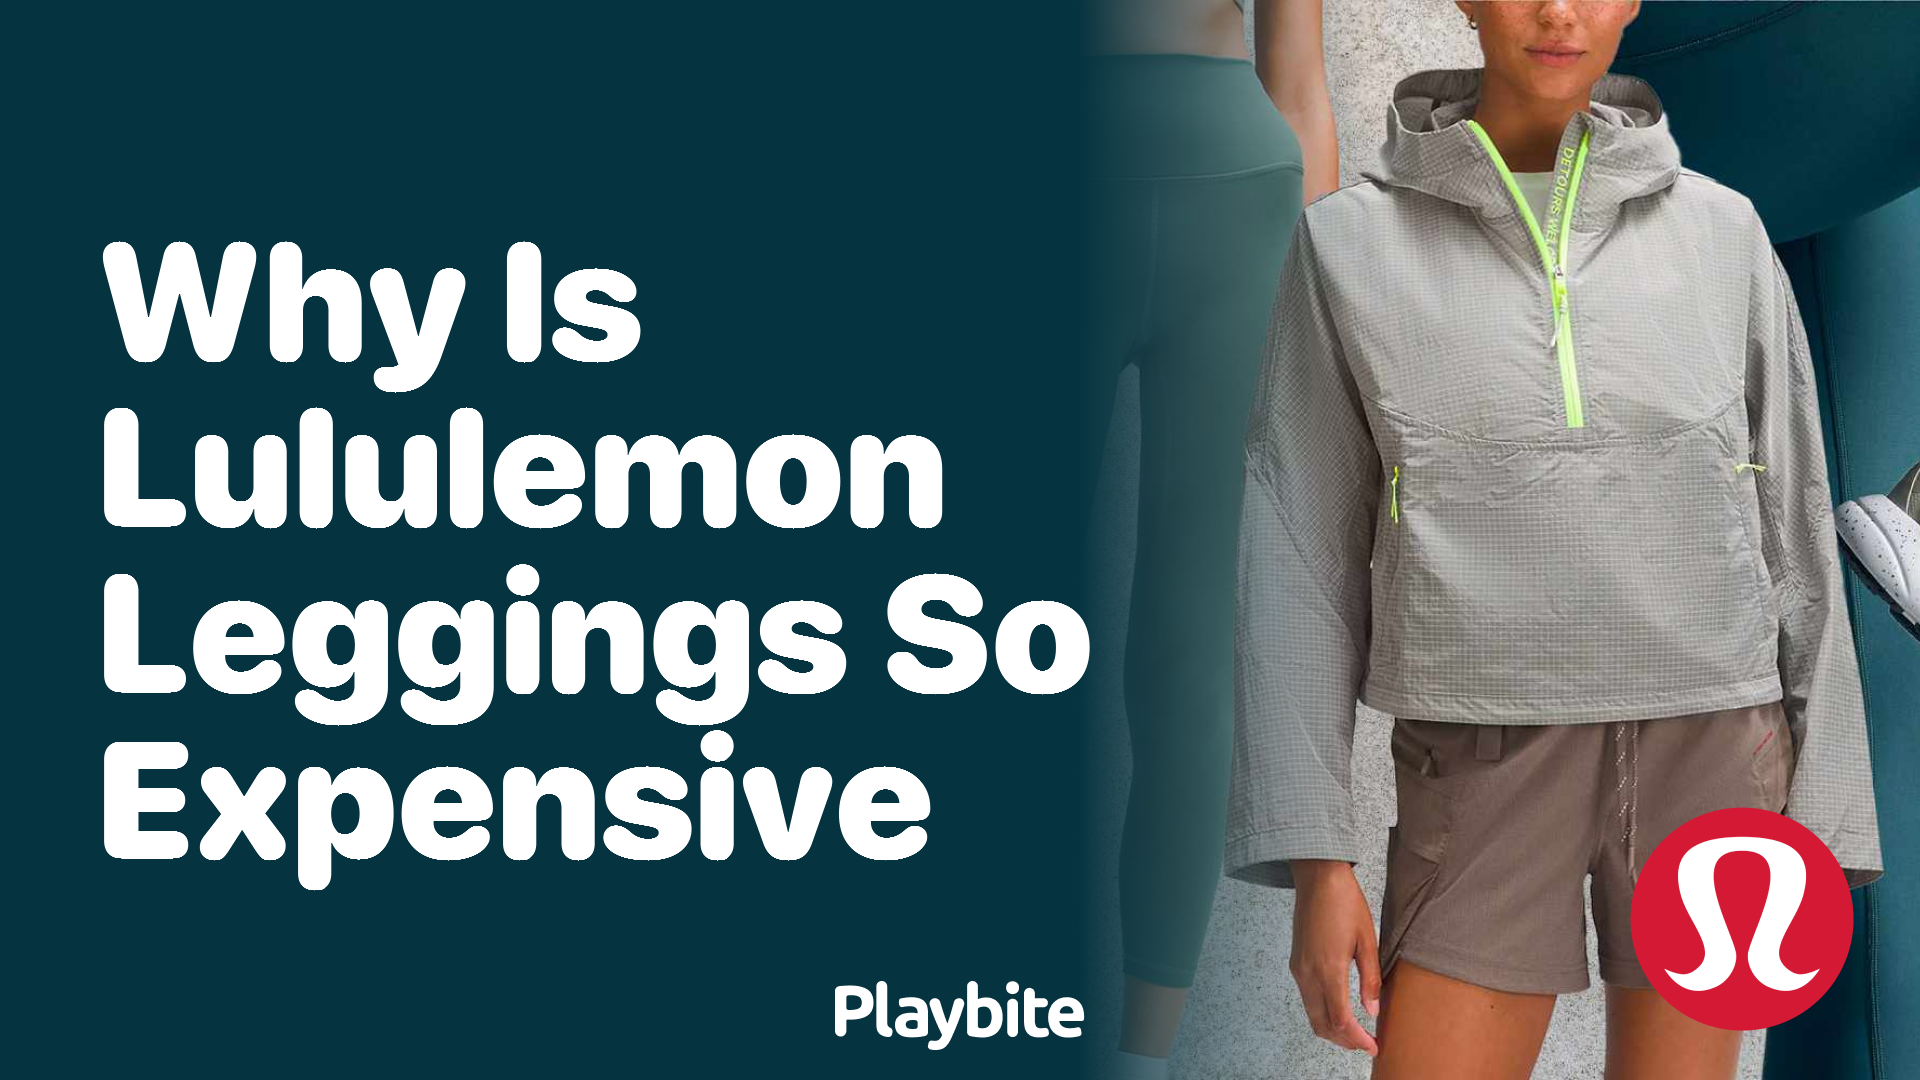 Why Are Lululemon Leggings So Expensive? - Playbite